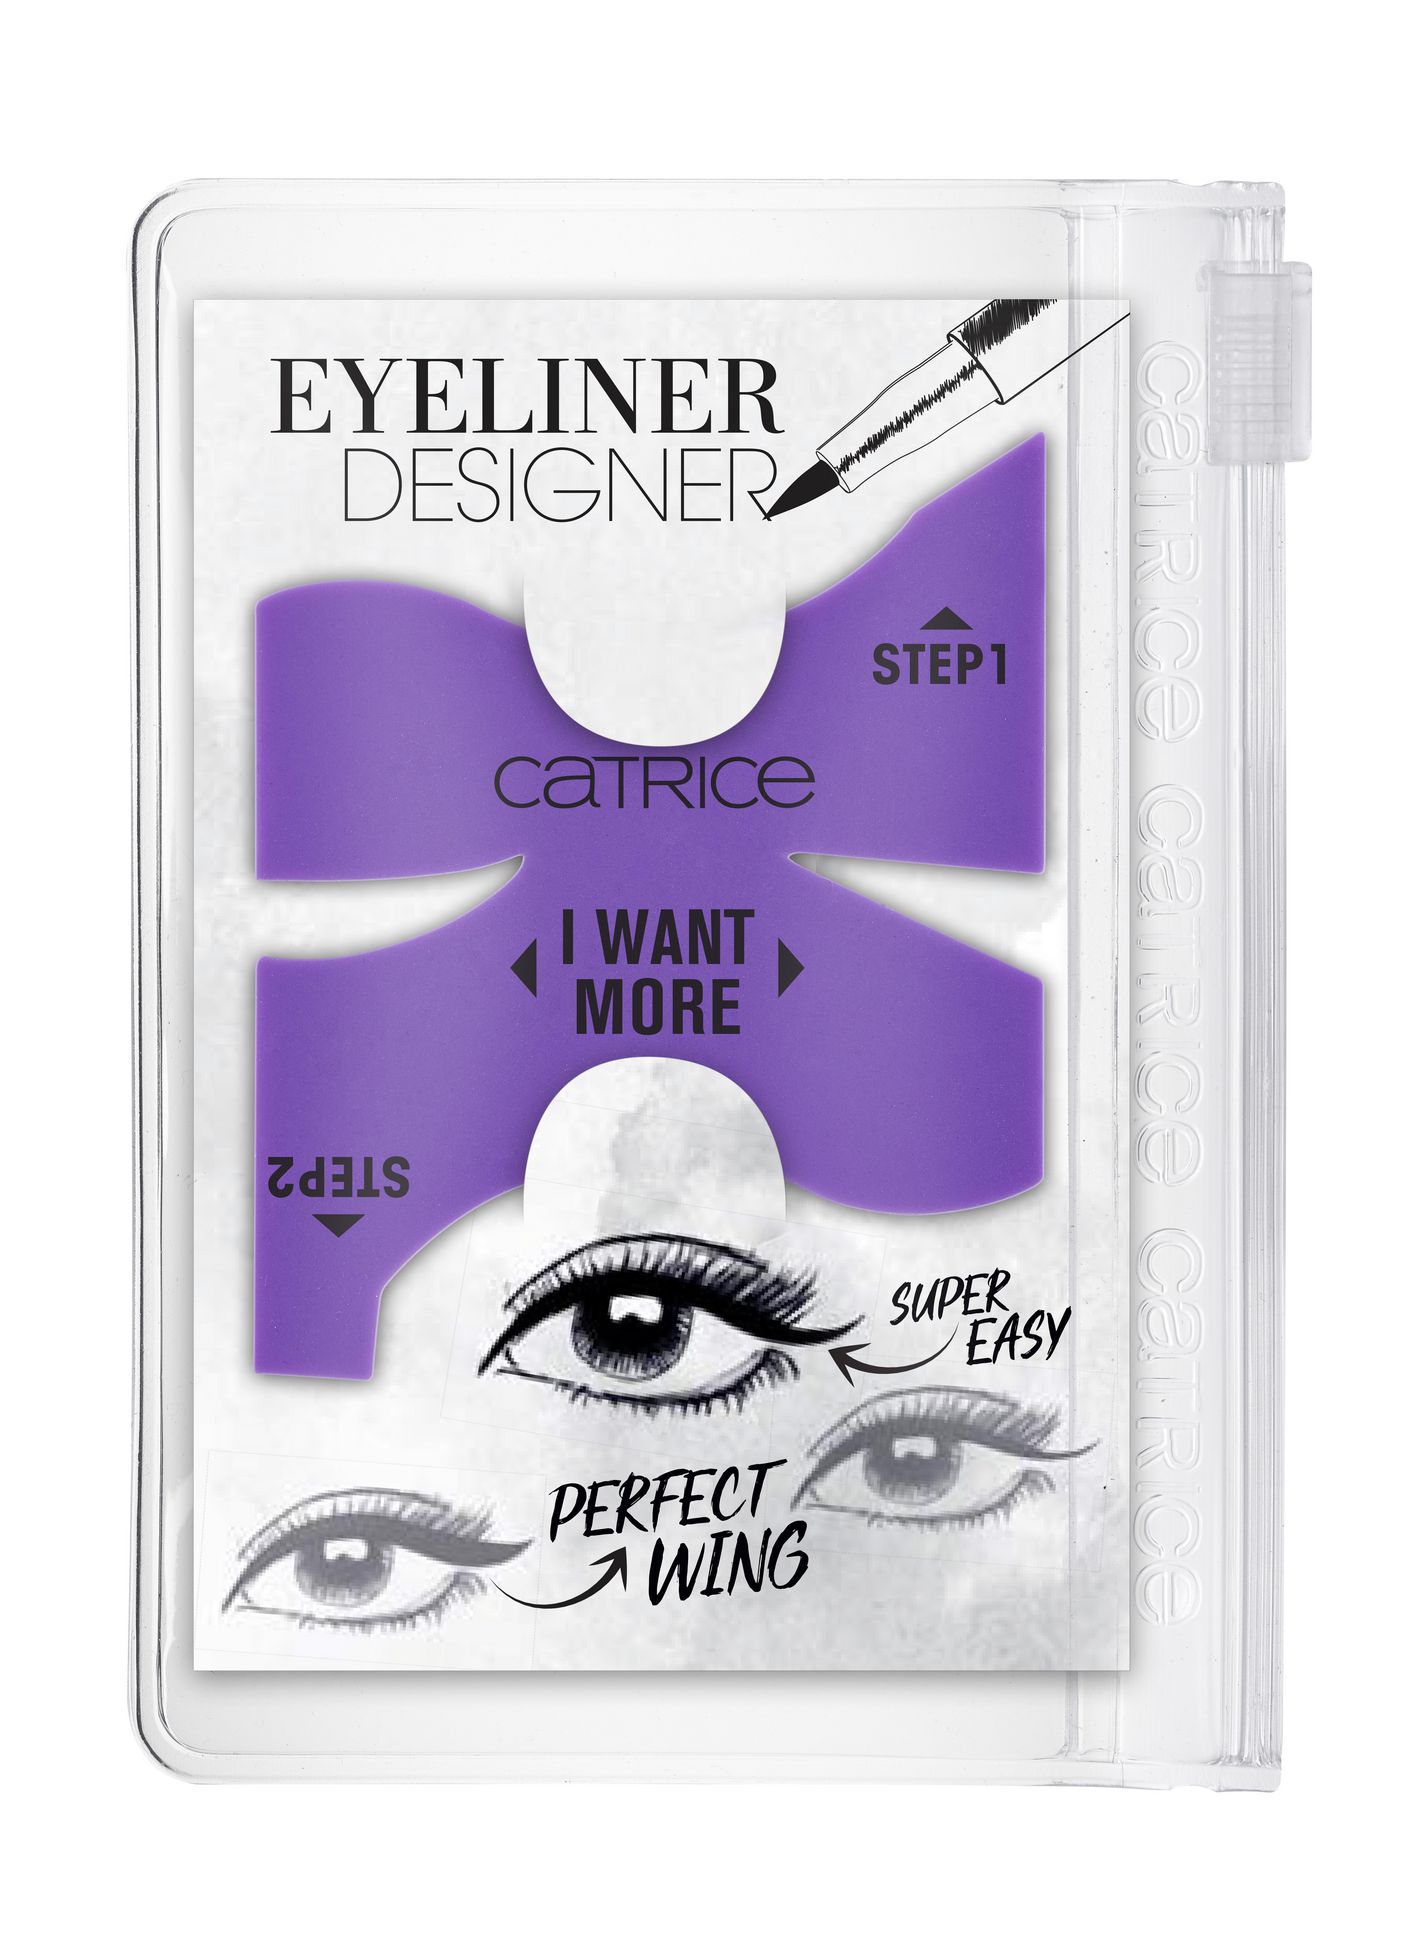 Catrice Eyeliner Designer 010